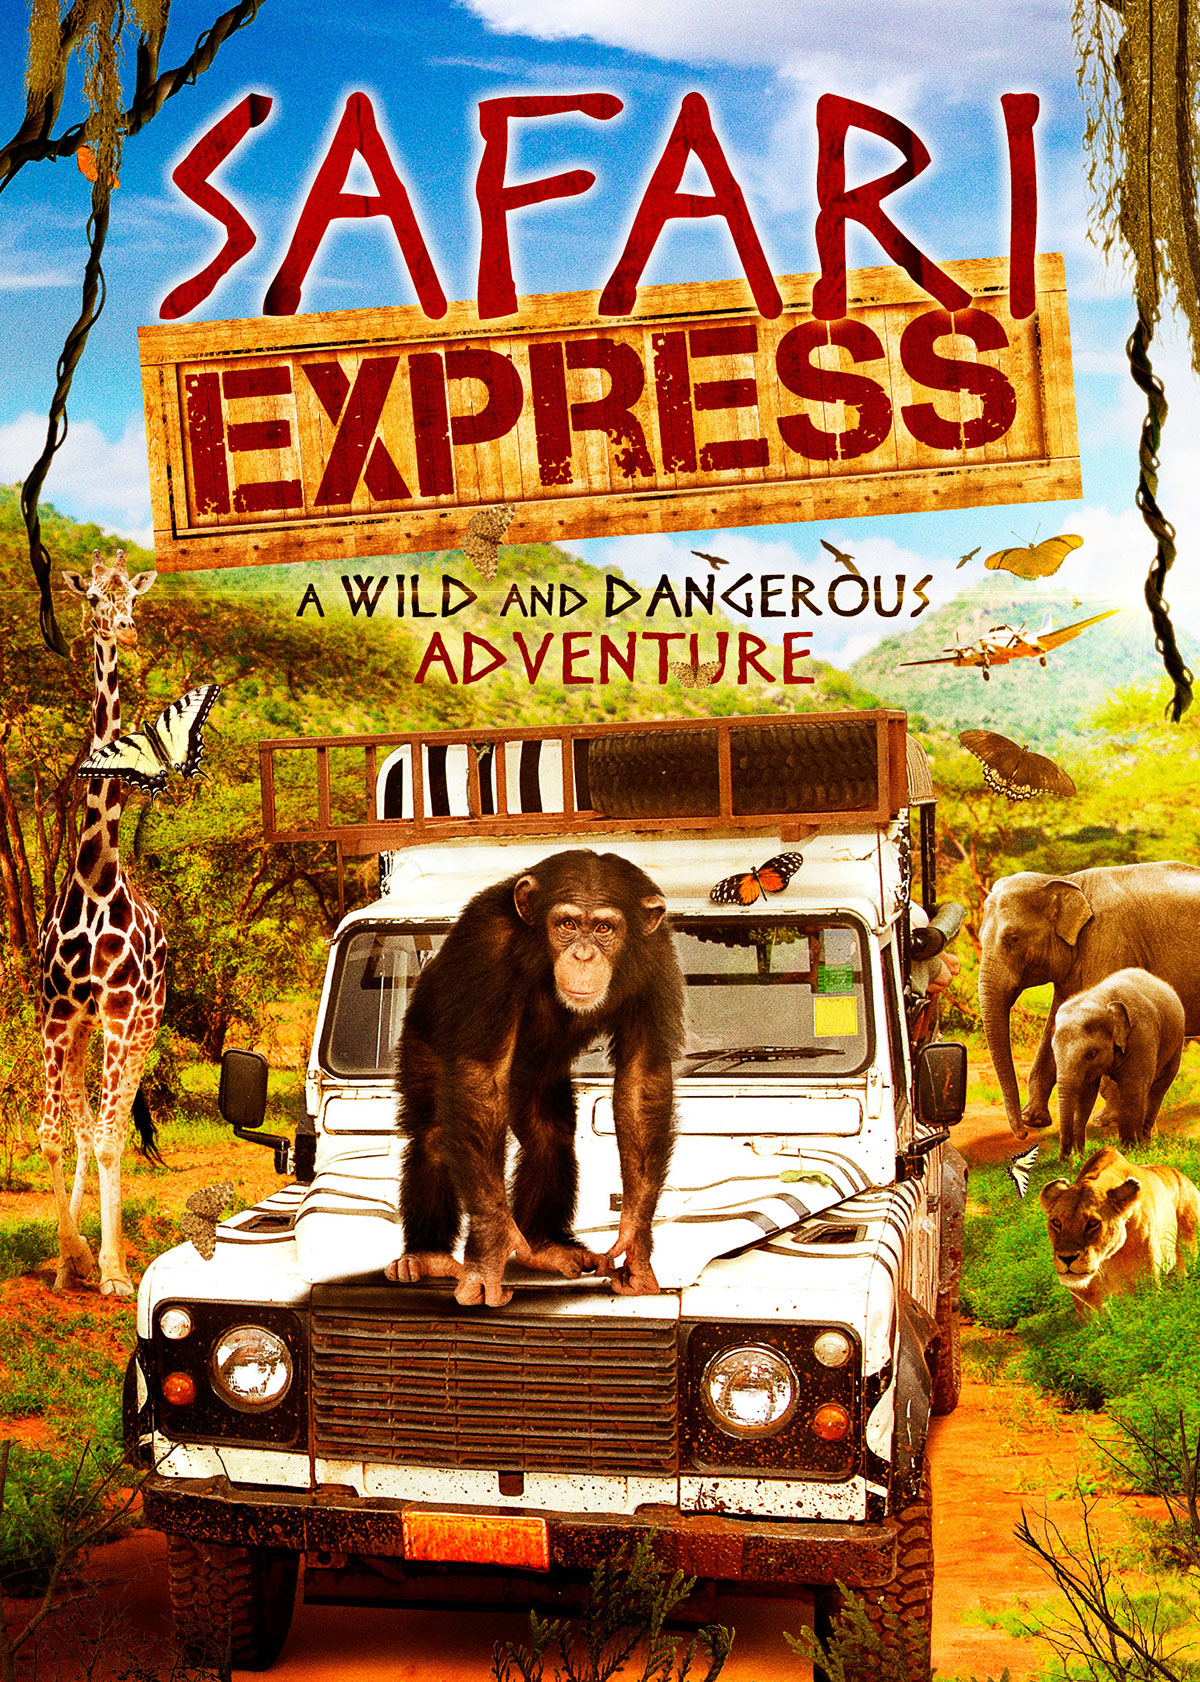 Adobe Portfolio Film Keyart movie poster adventure safari